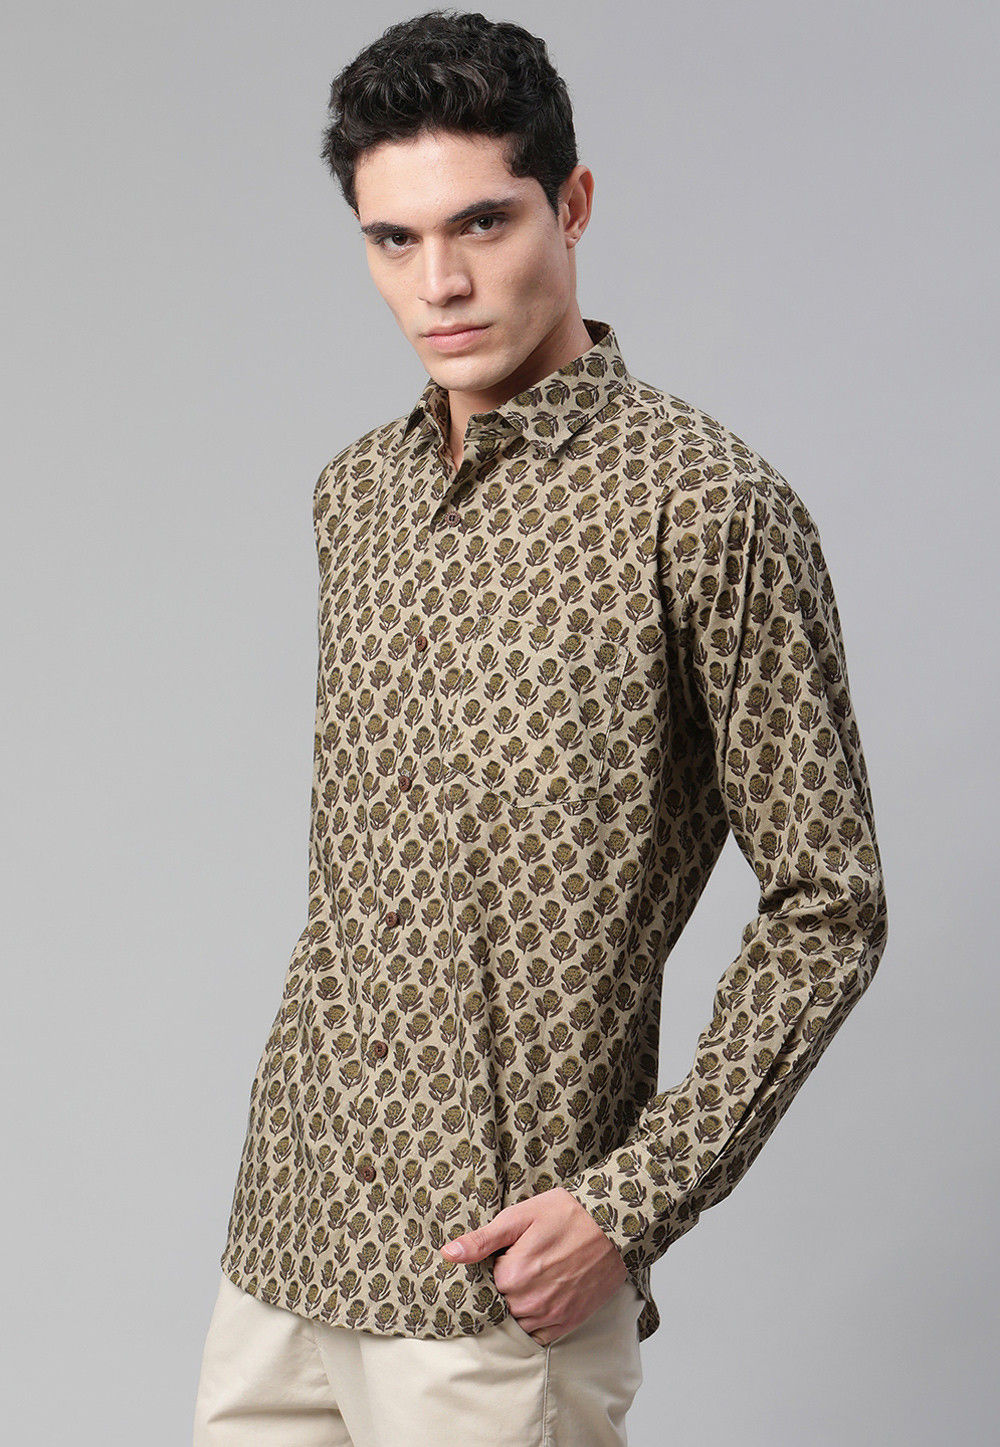 Buy Printed Cotton Shirt in Beige Online : MRE170 - Utsav Fashion